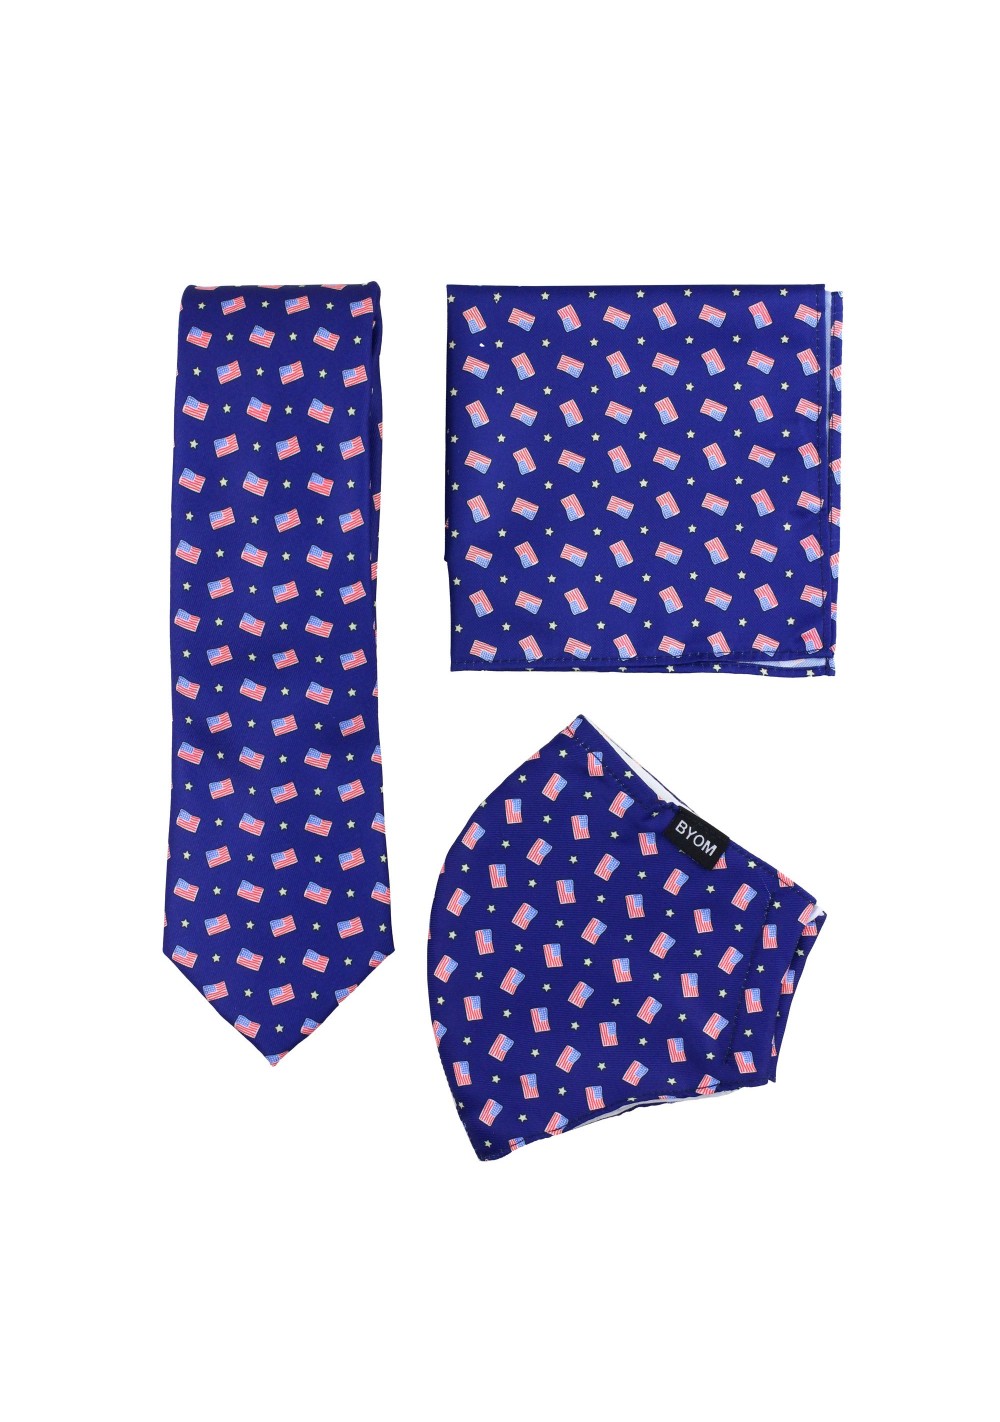 USA flag mask and necktie set